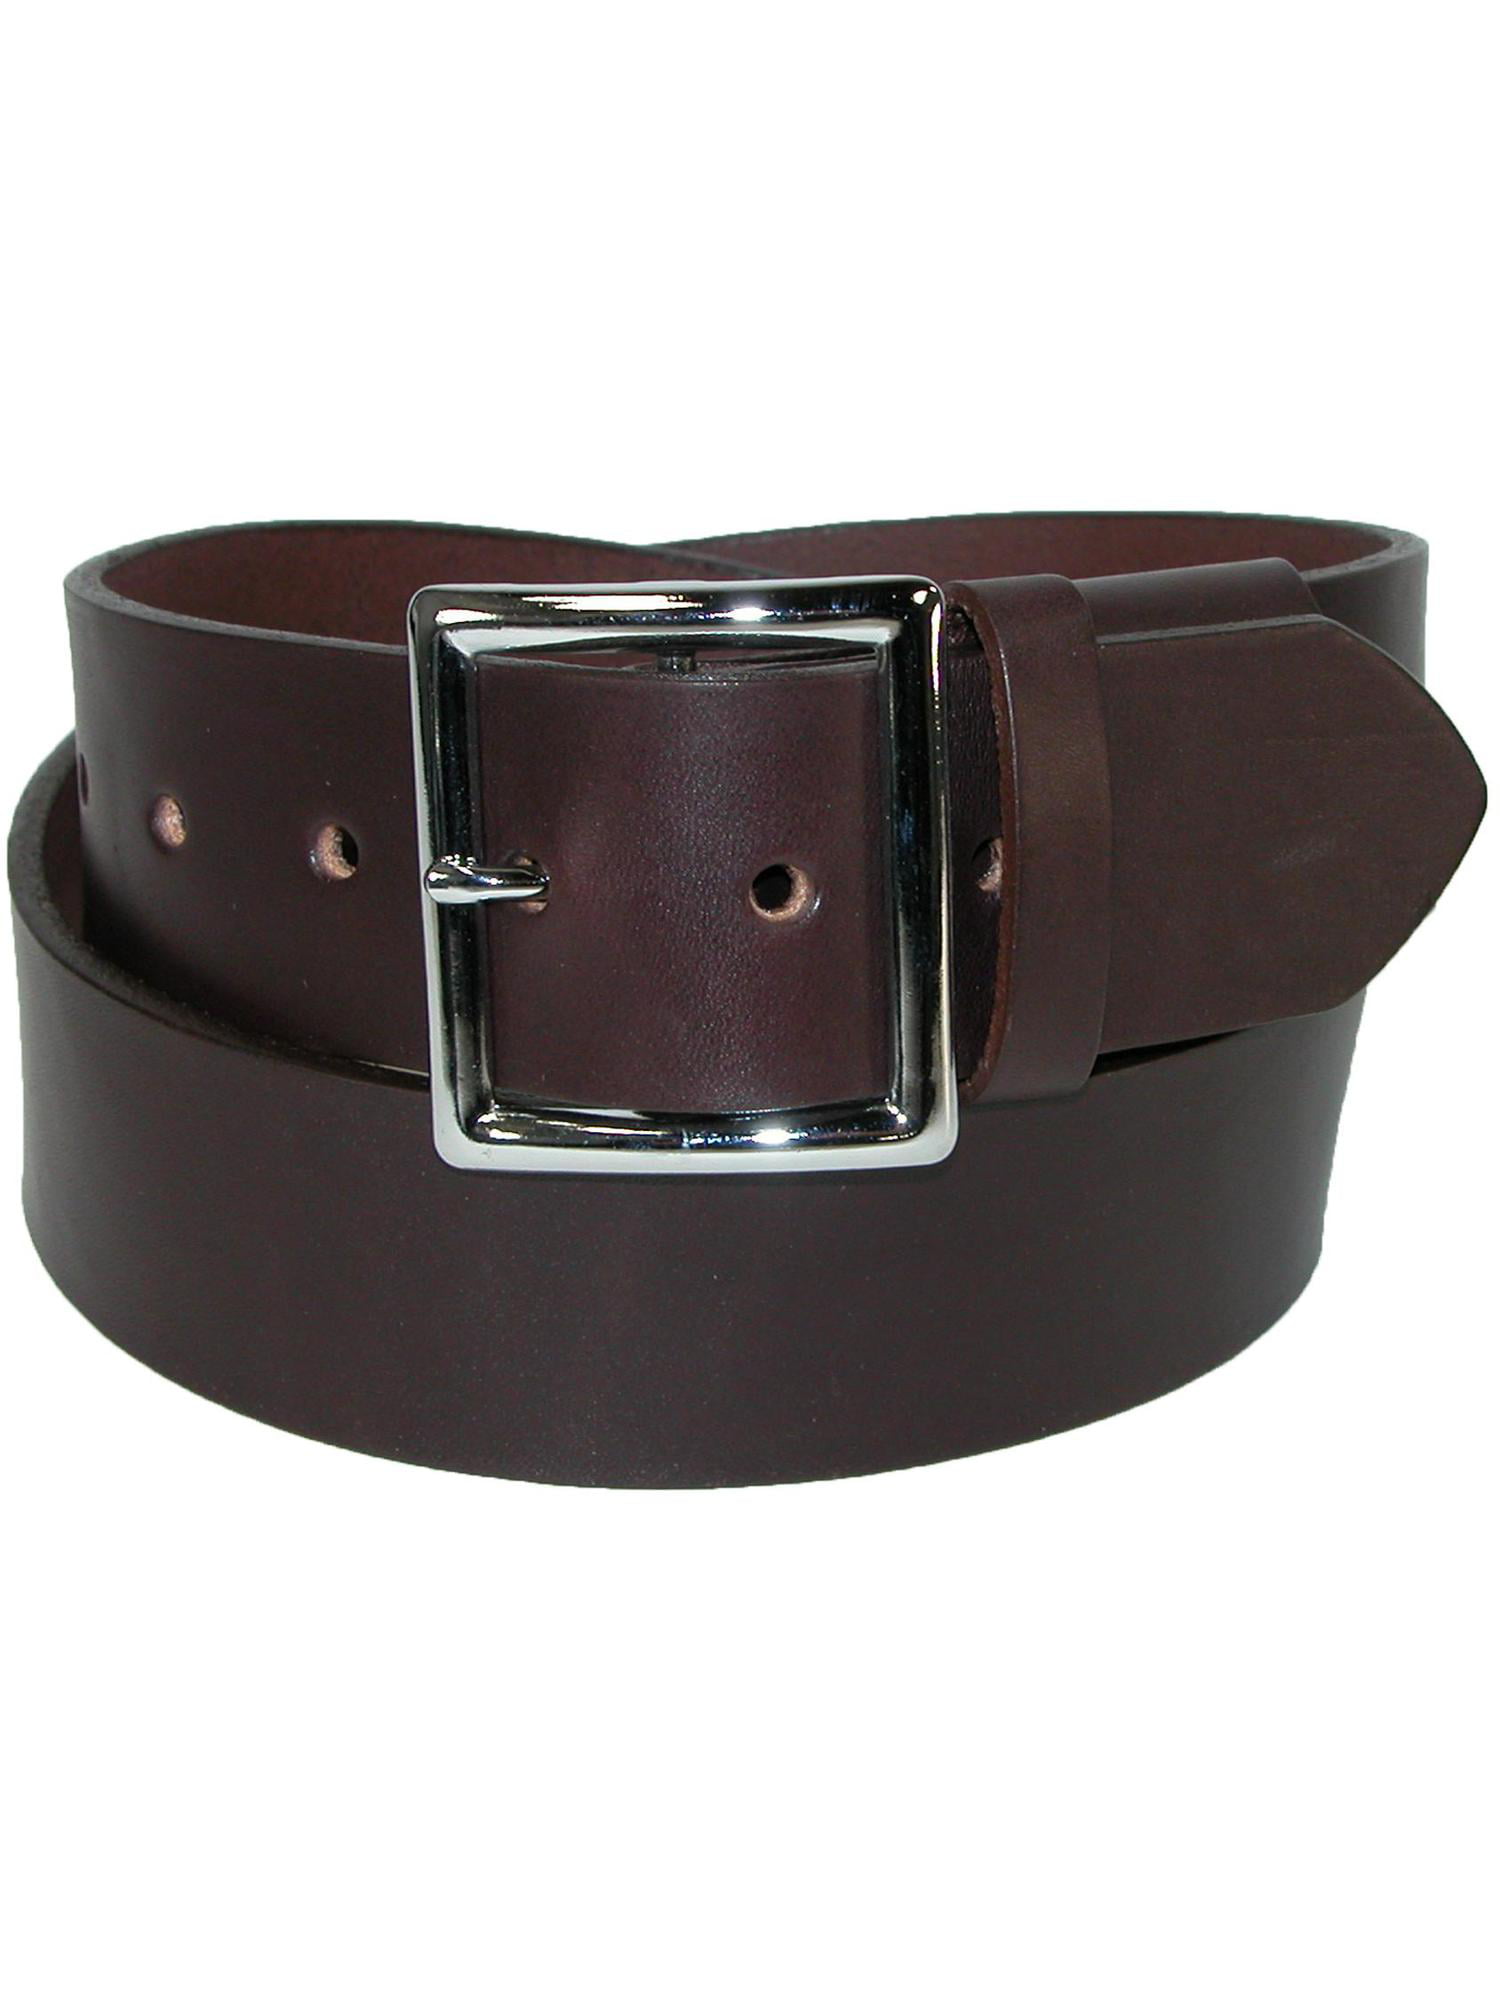 Size 40 Mens Leather Garrison Belt with Hidden Elastic, Brown - Walmart.com